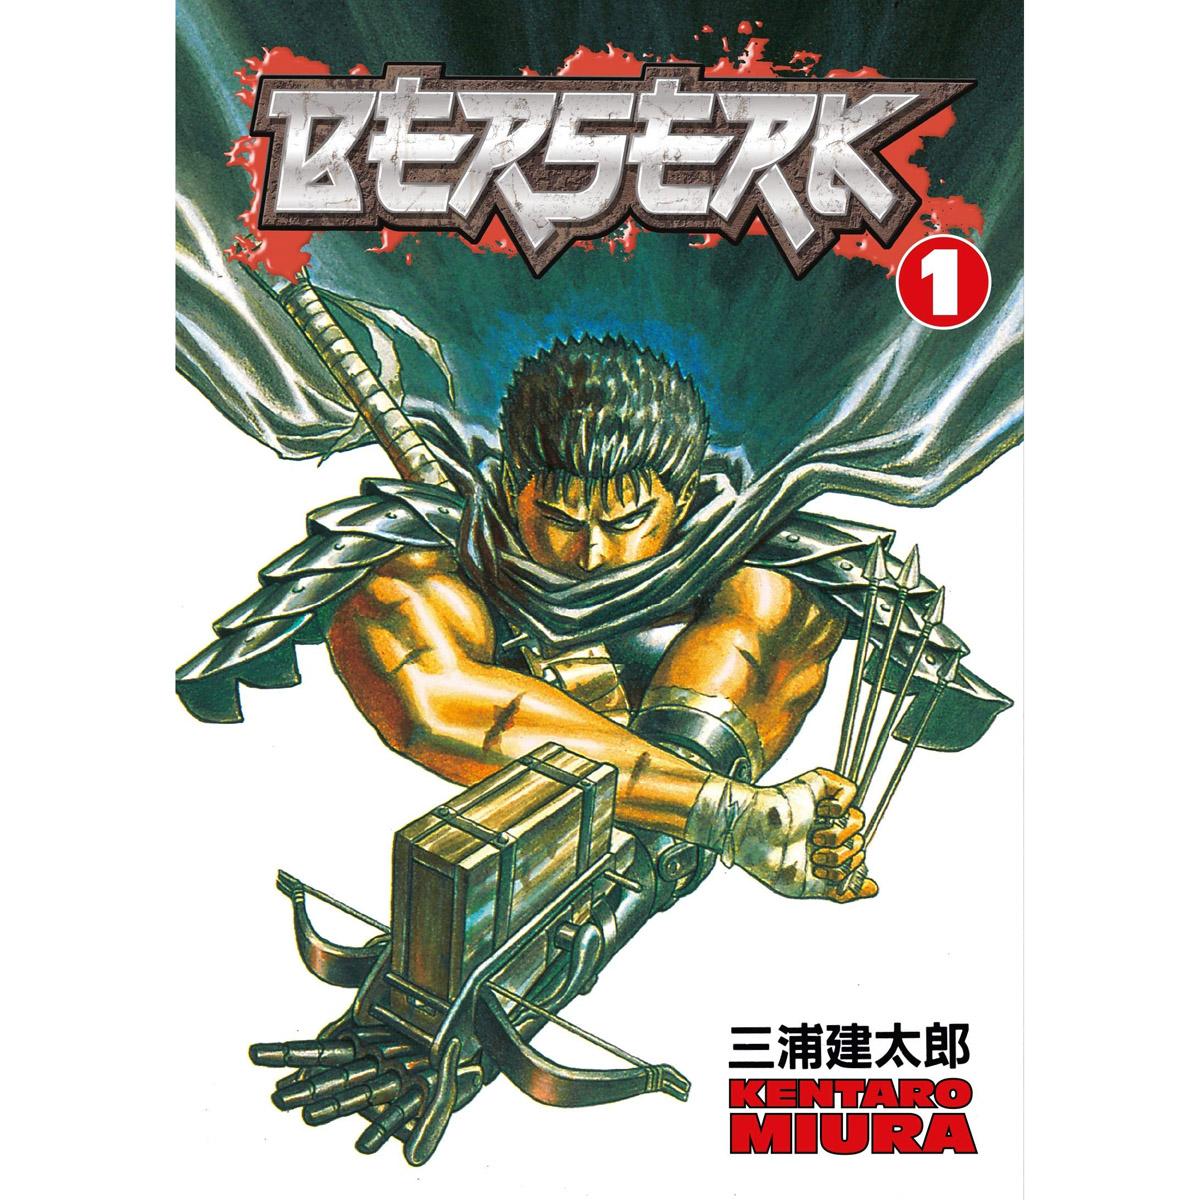 Berserk Comic eBook for $3.99